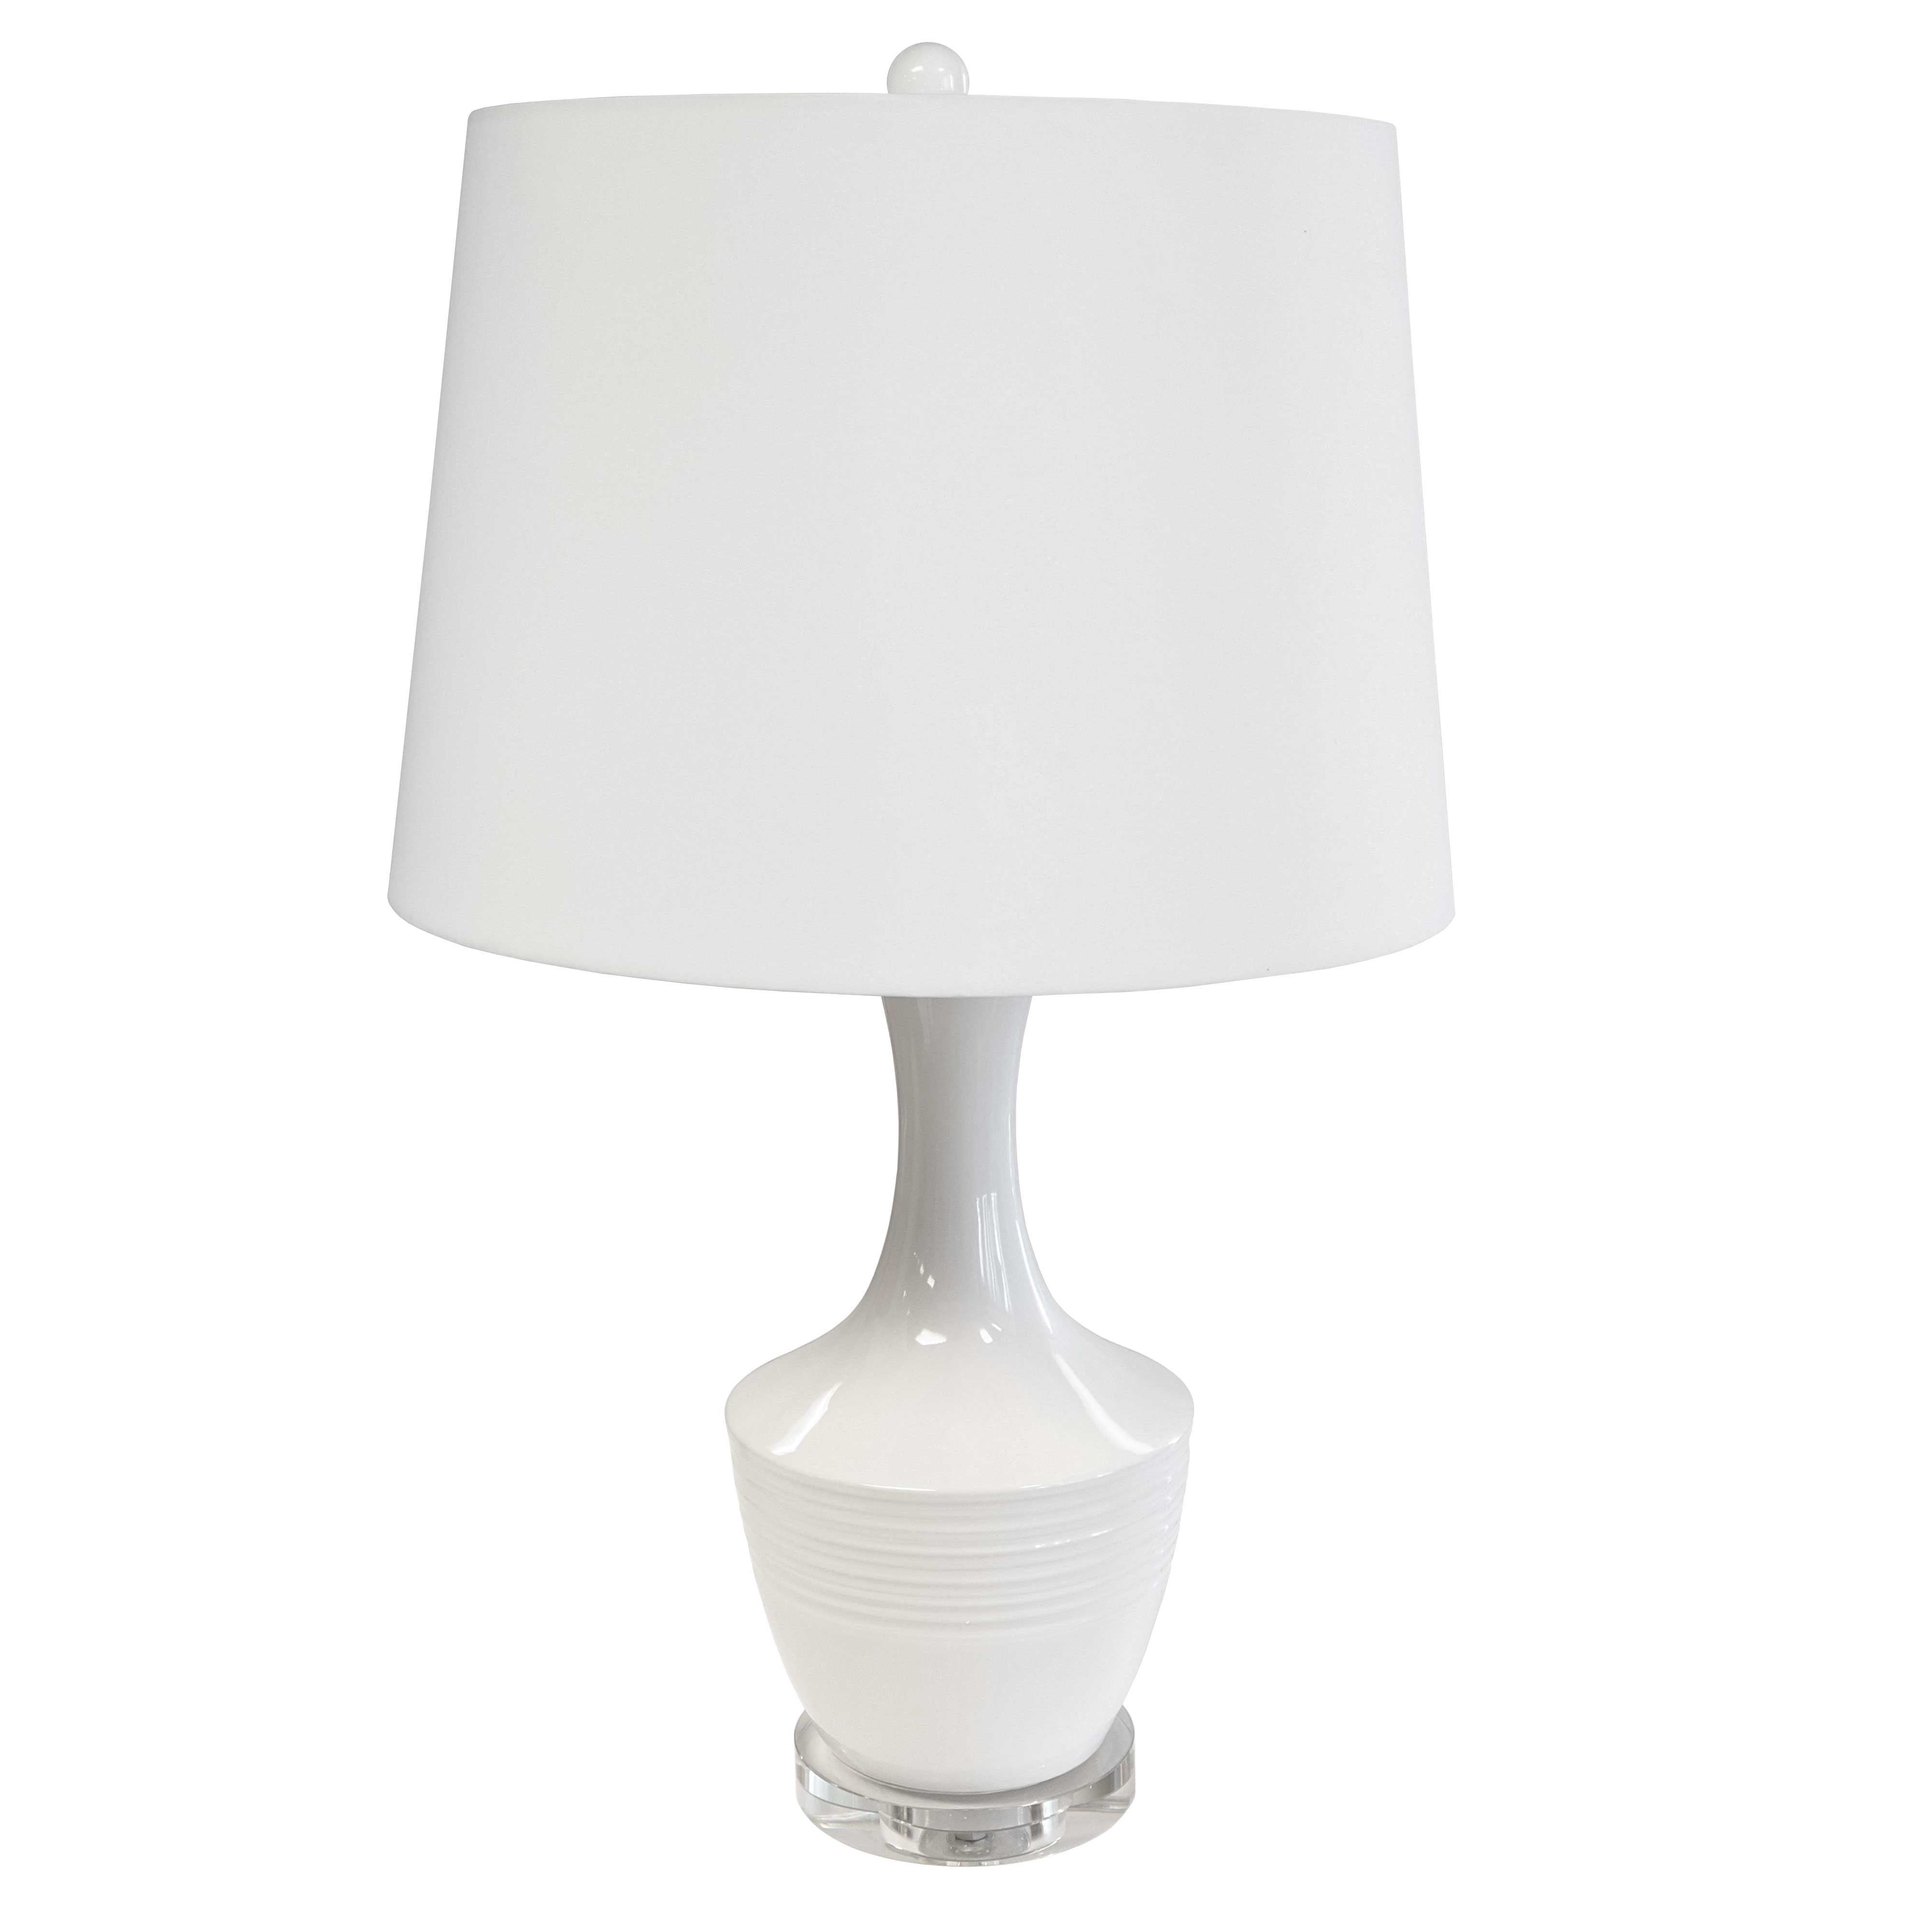 GOLIATH Lampe sur table Blanc - GOL-271T-WH | DAINOLITE